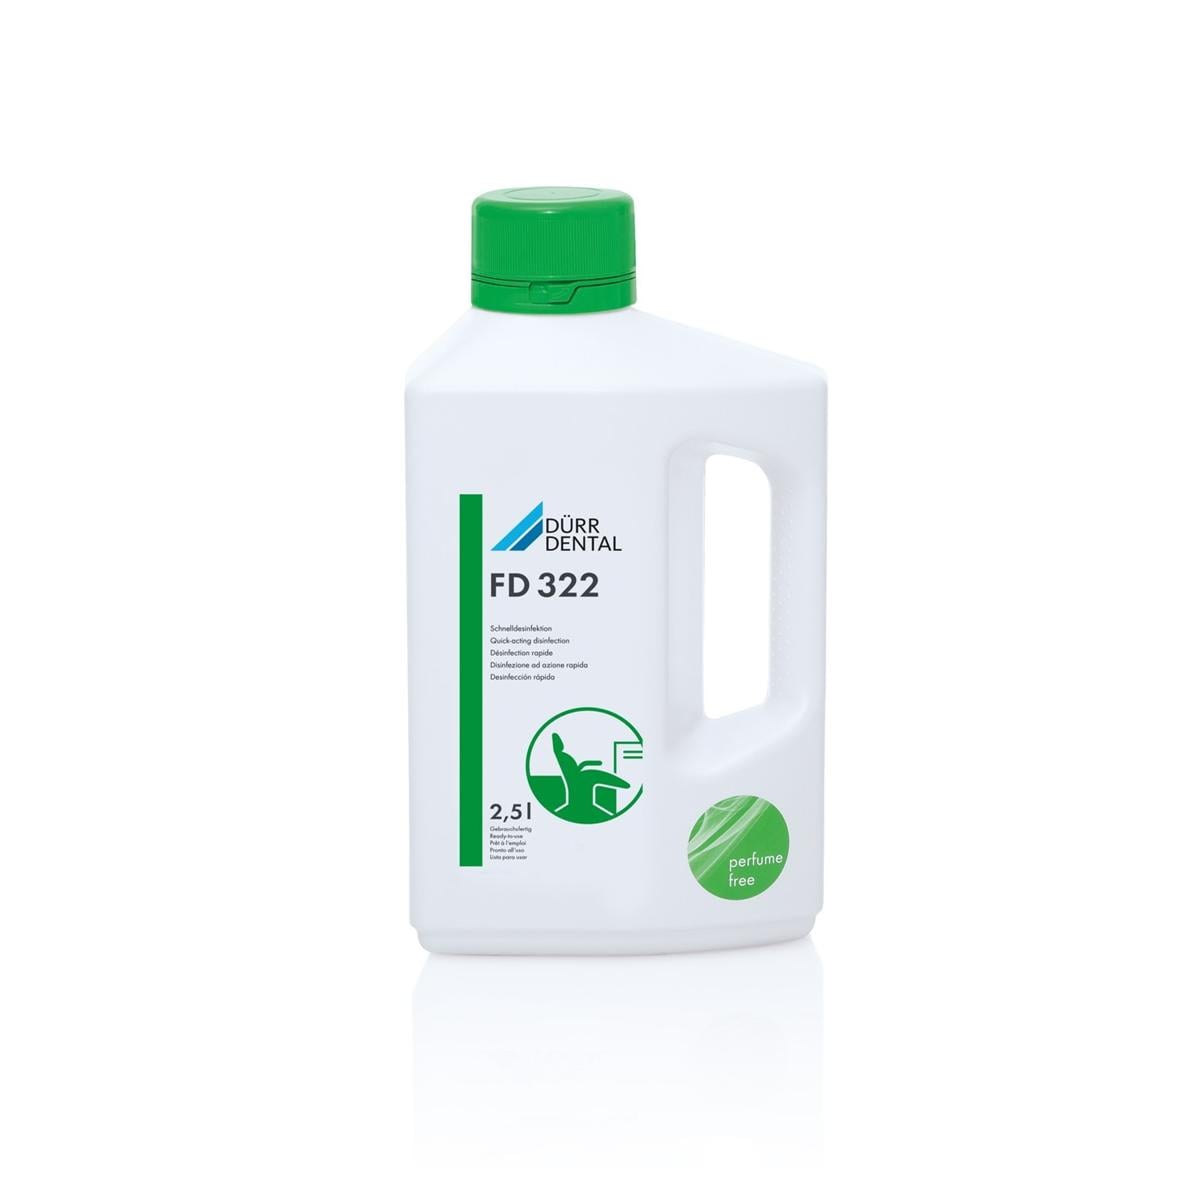 FD 322 parfumvrij - Fles, 2,5 liter